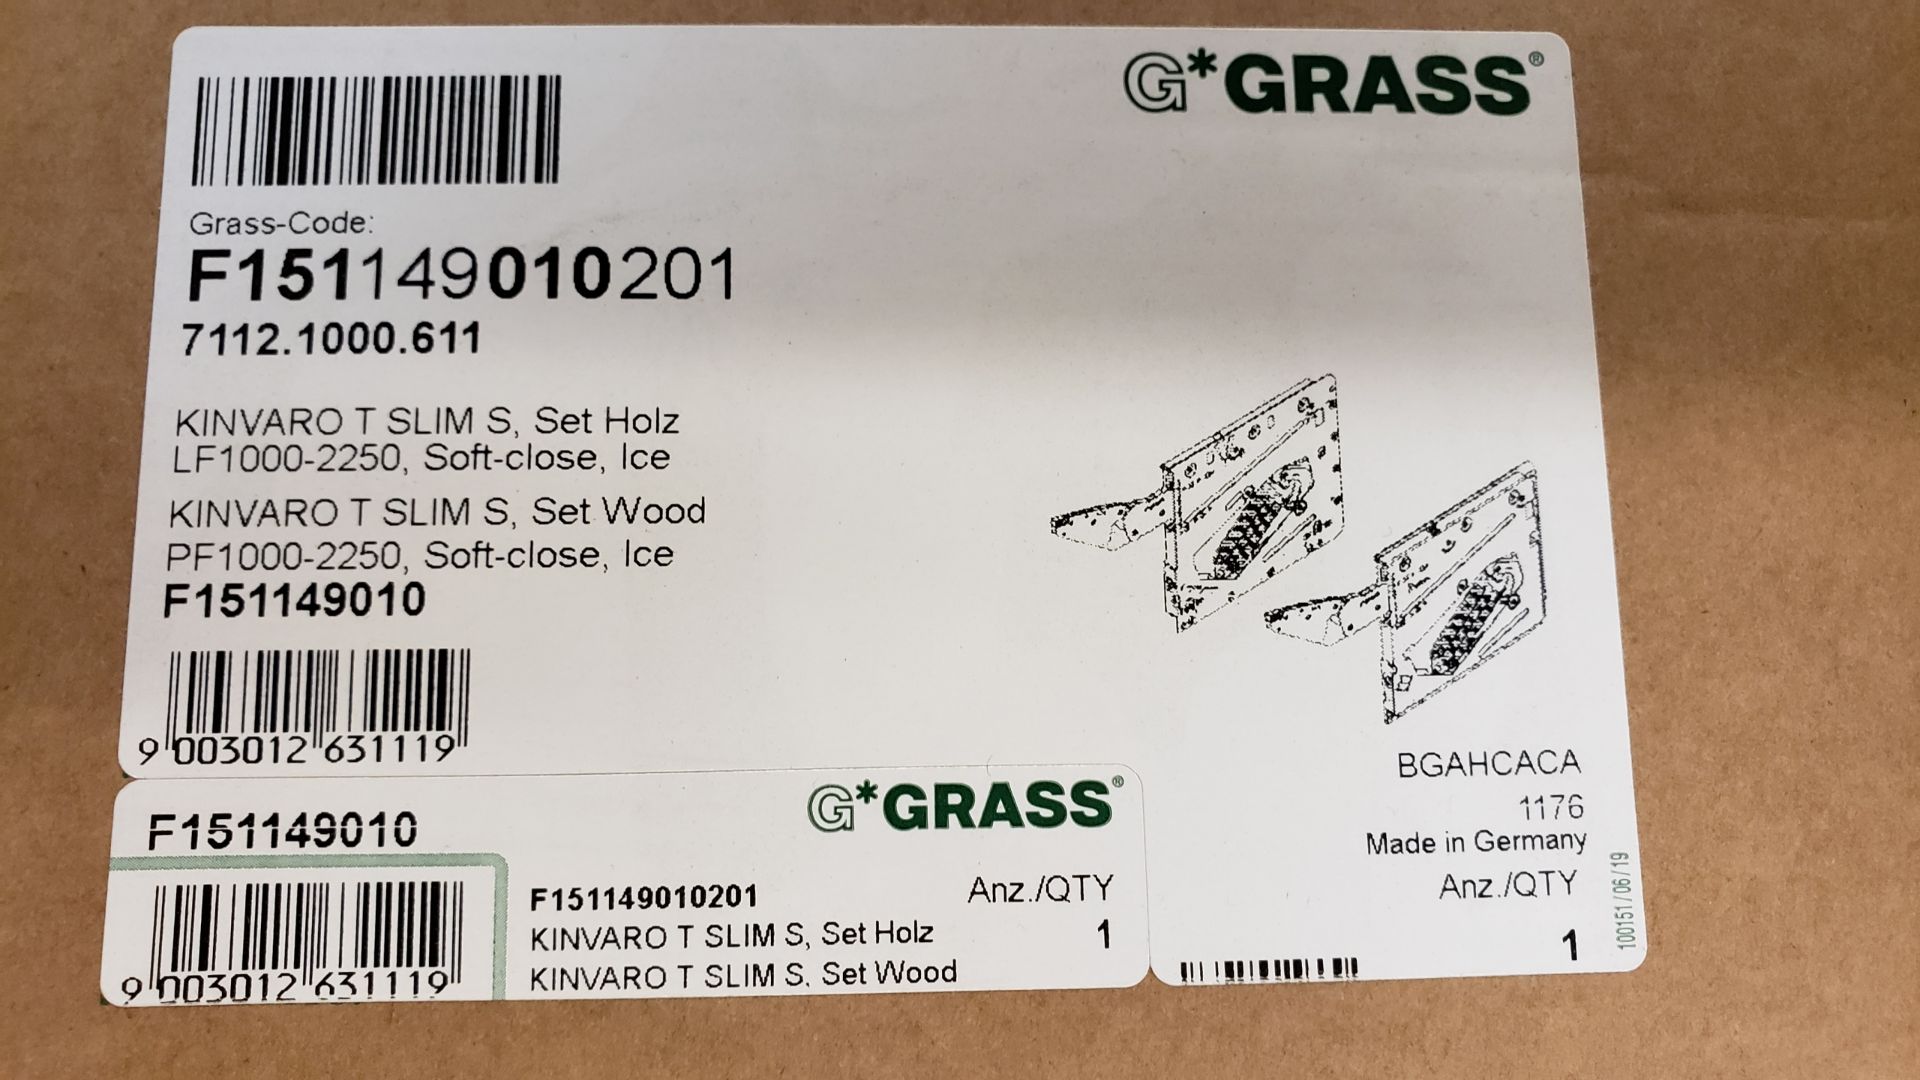 BOXES OF GRASS KINVARO T SLIM S, SET WOOD PF1000-2250, SOFT-CLOSE, ICE HARDWARE (SUBJECT TO BULK BID - Image 2 of 2